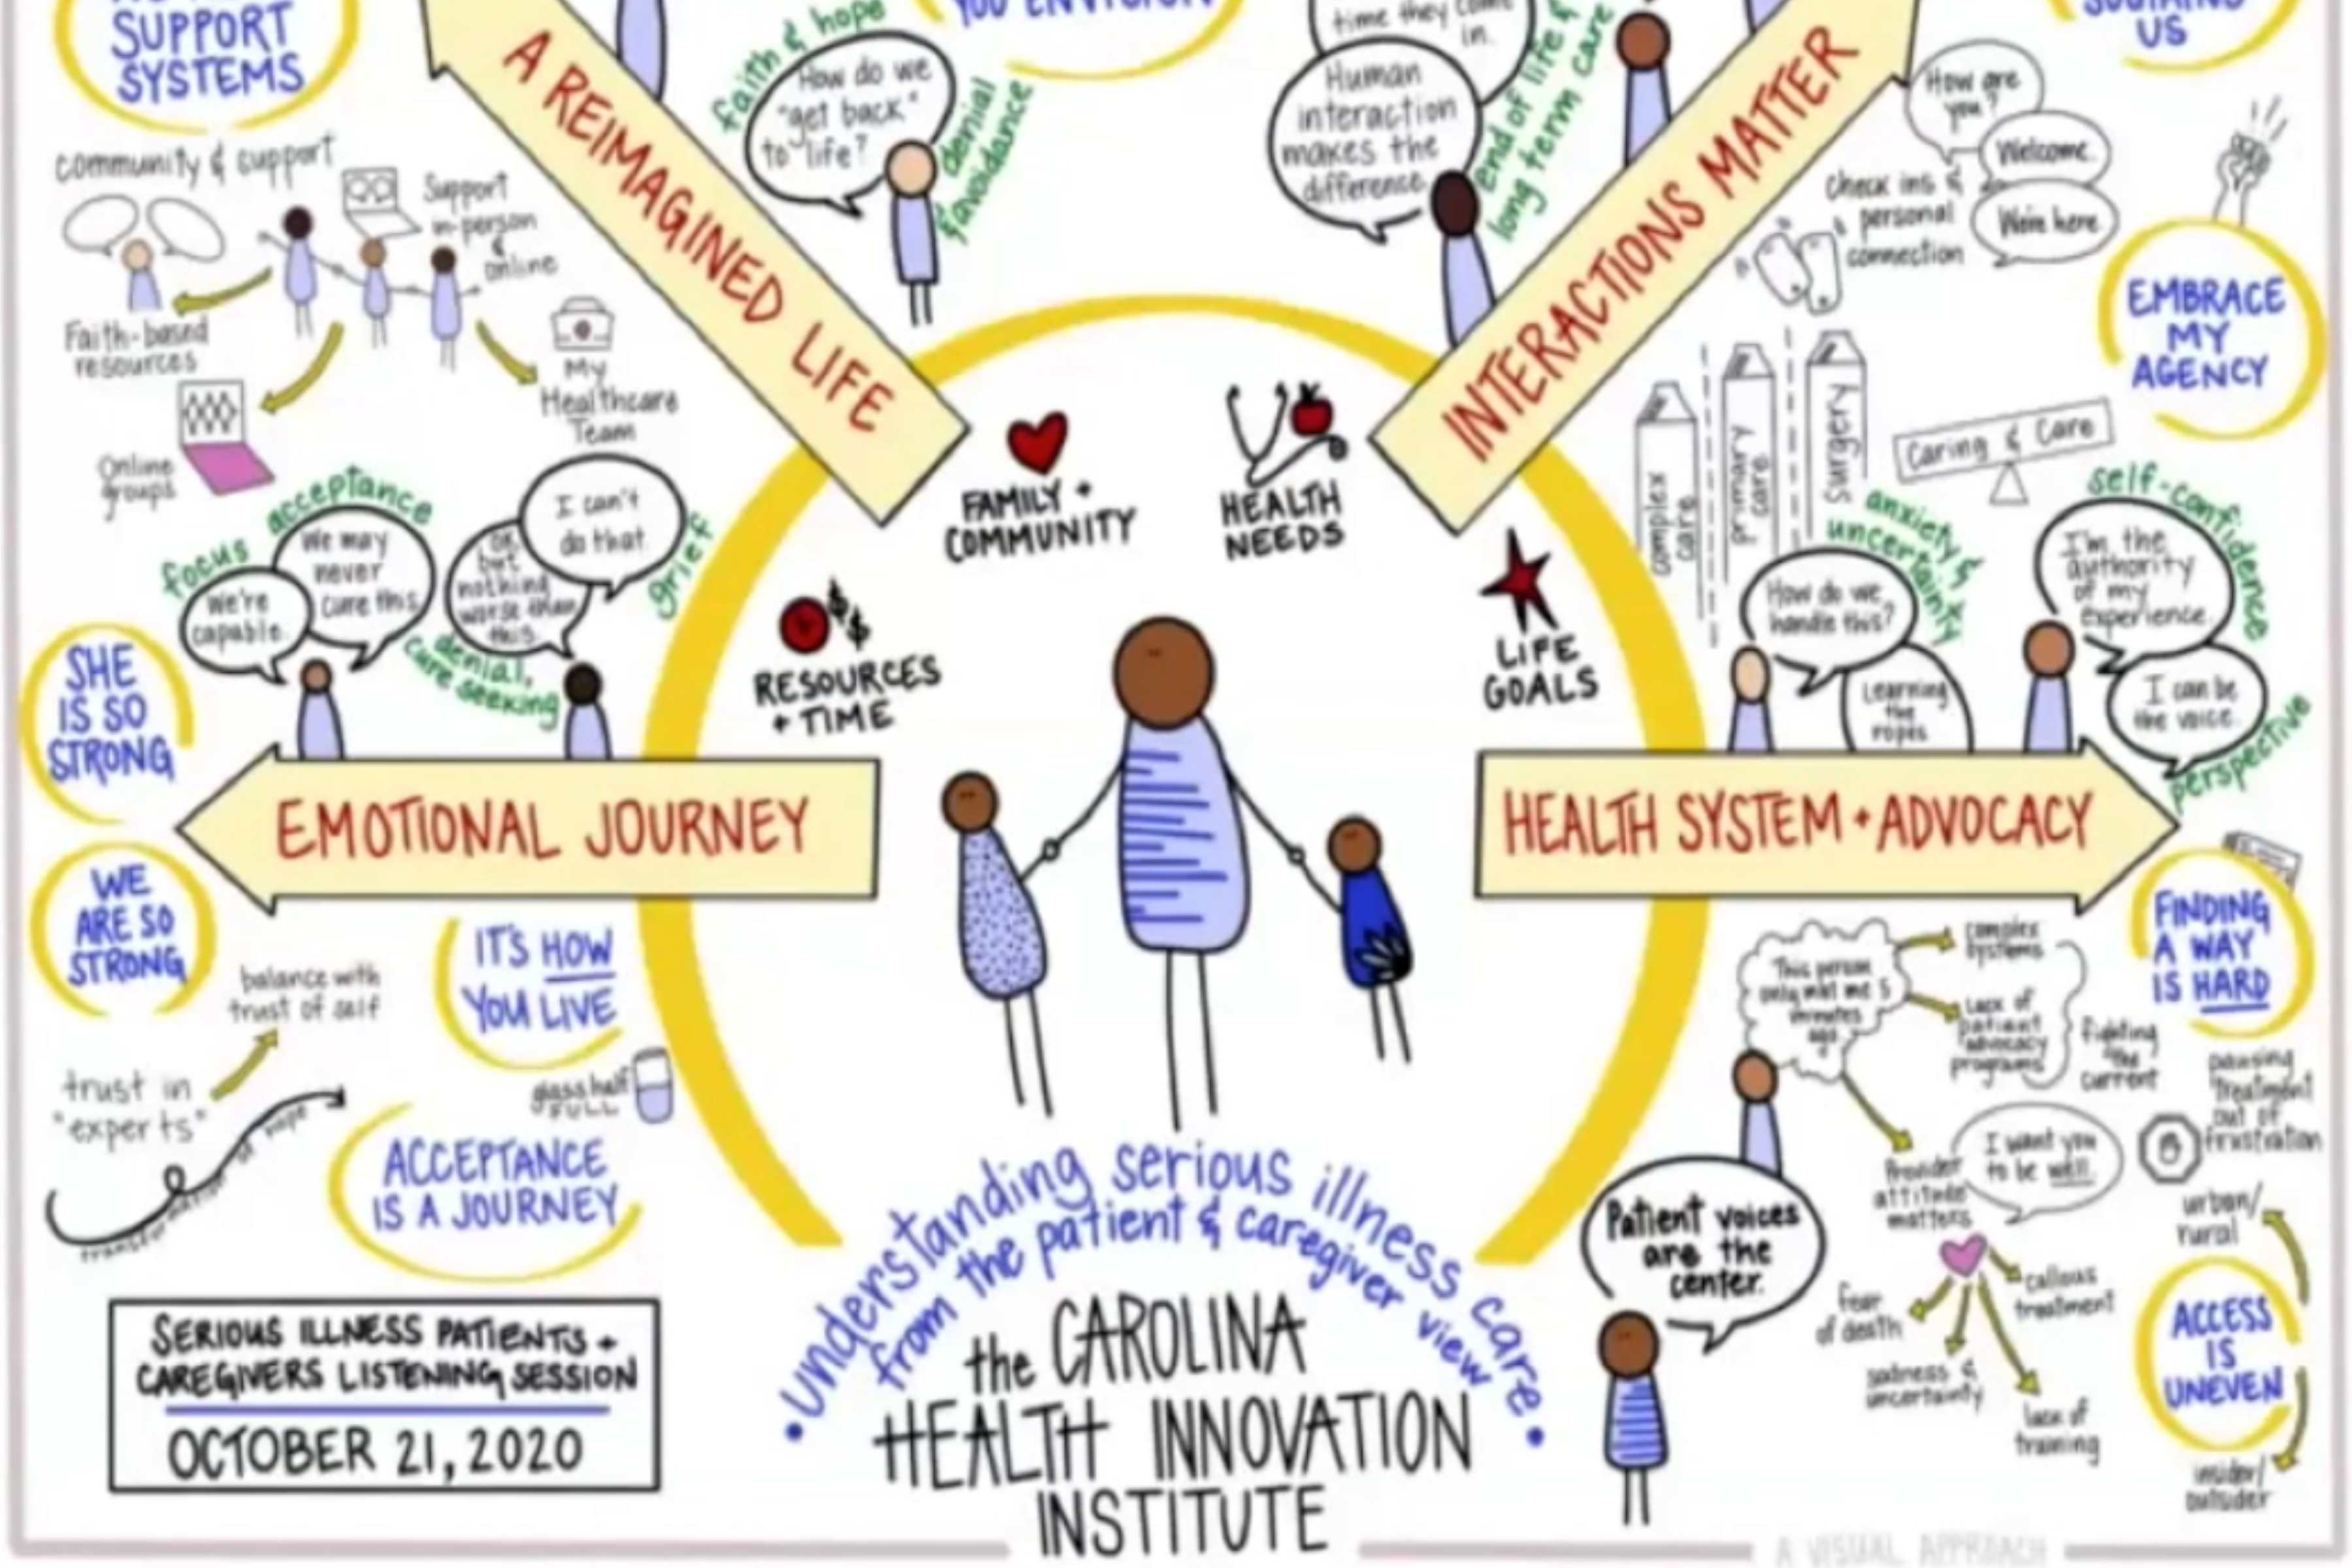 Carolinas Health Innovation Institute